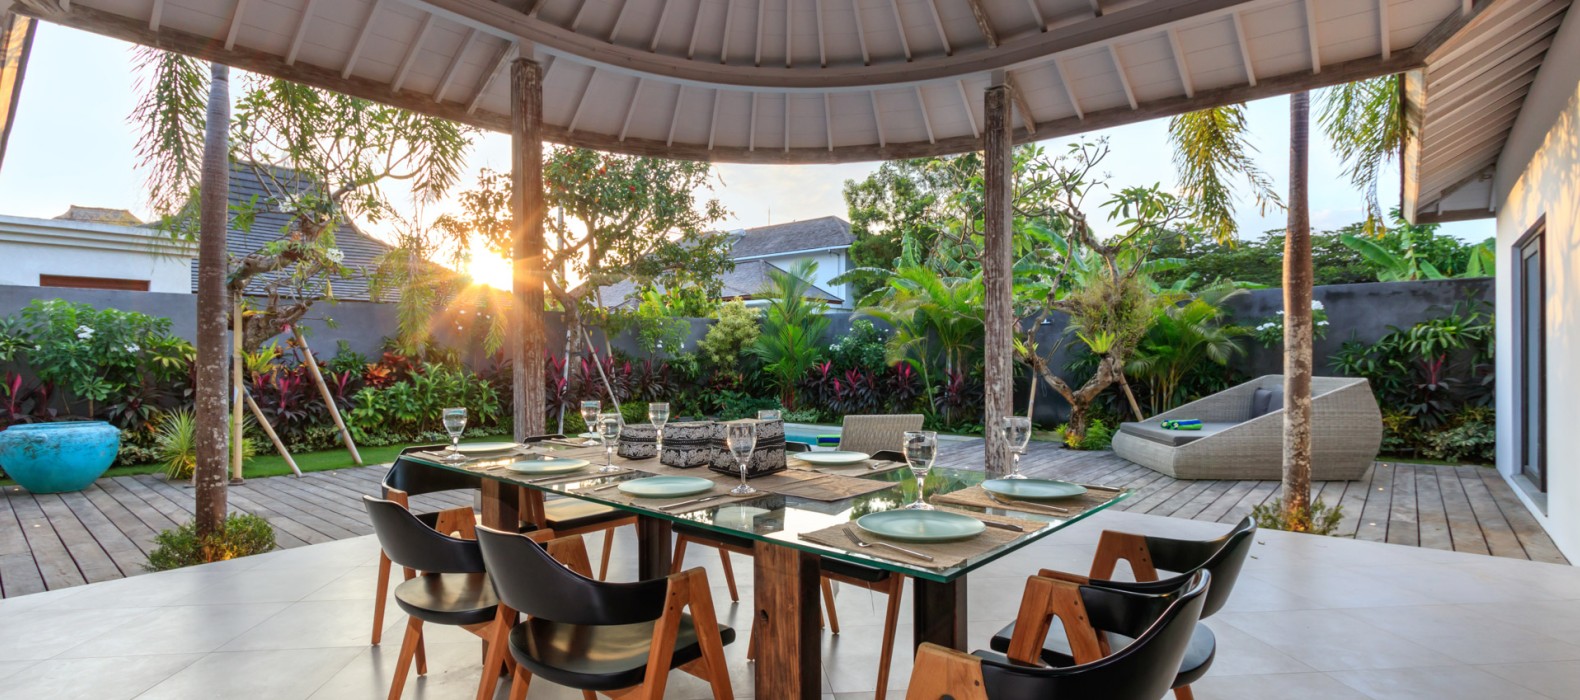 Exterior dining area of Villa Ohana in Bali